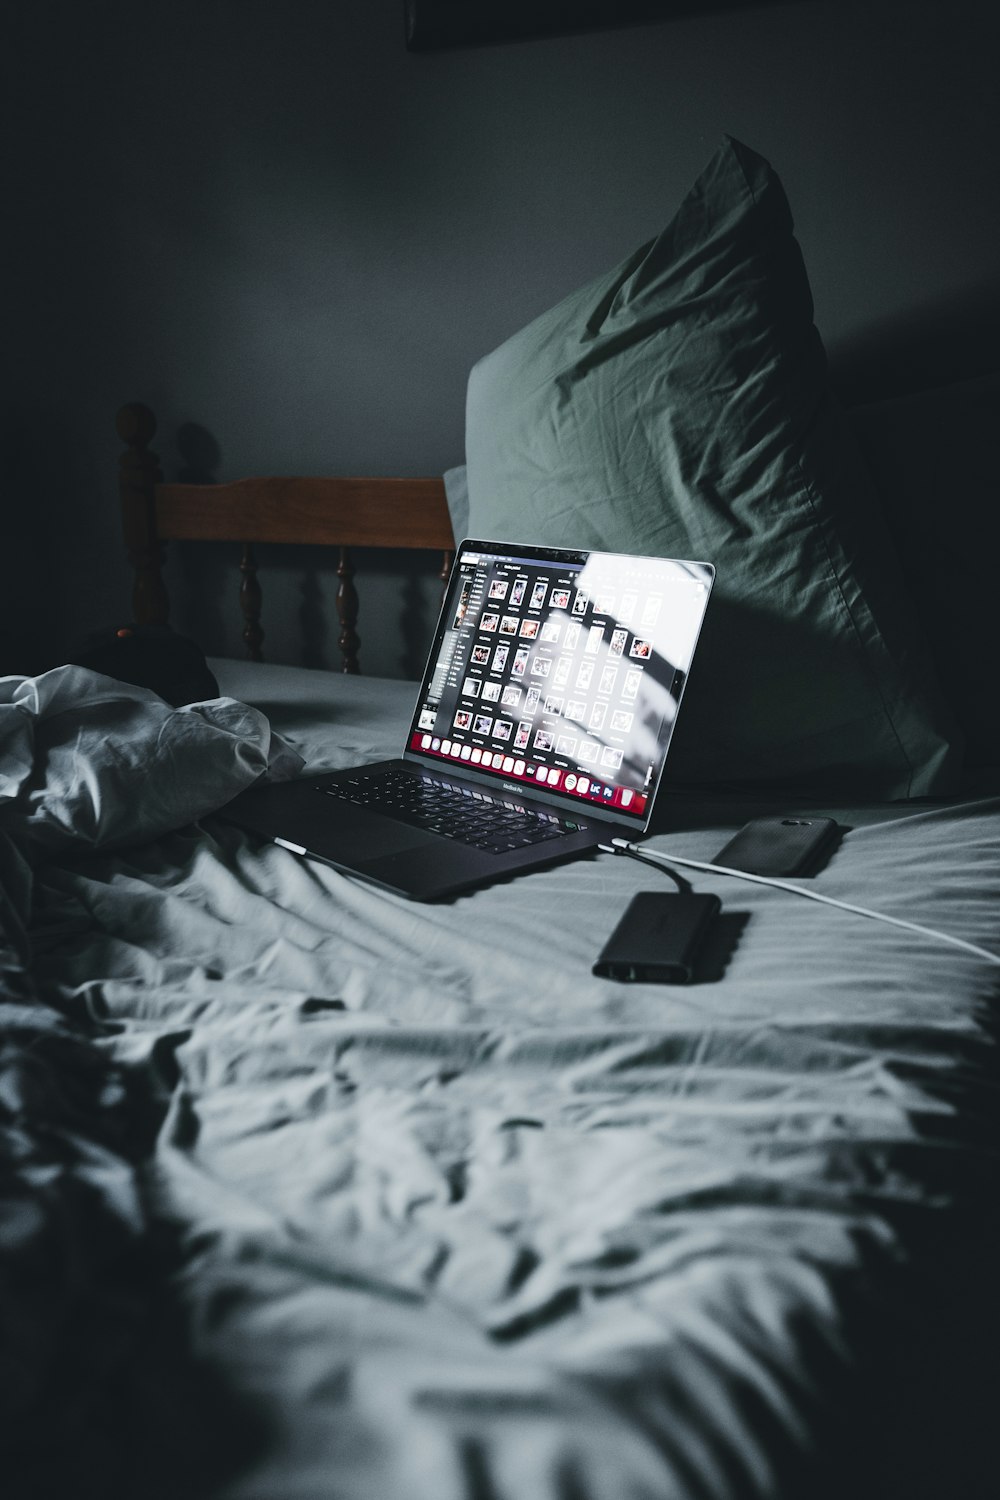 macbook pro on bed near black smartphone